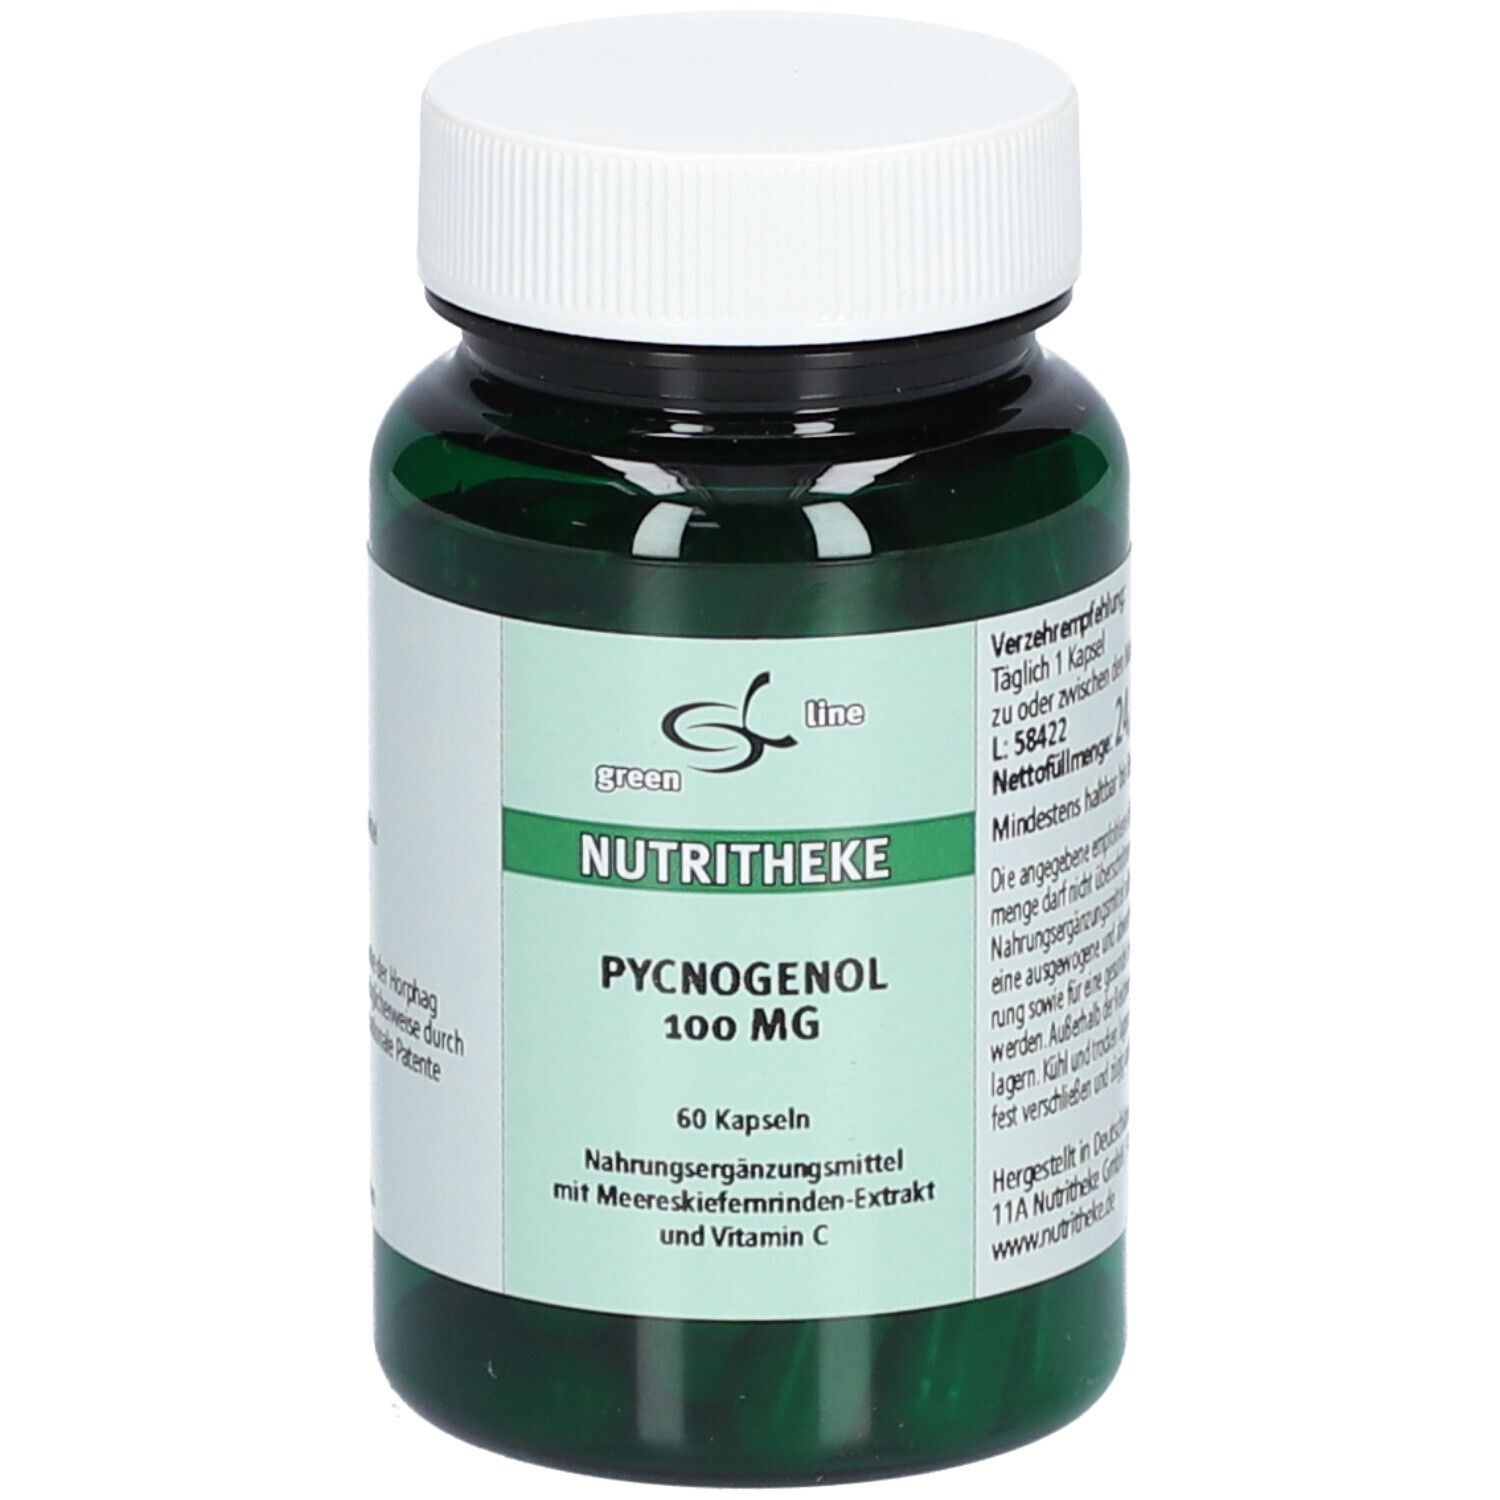 11 A Nutritheke GmbH green line Pycnogenol 100 mg